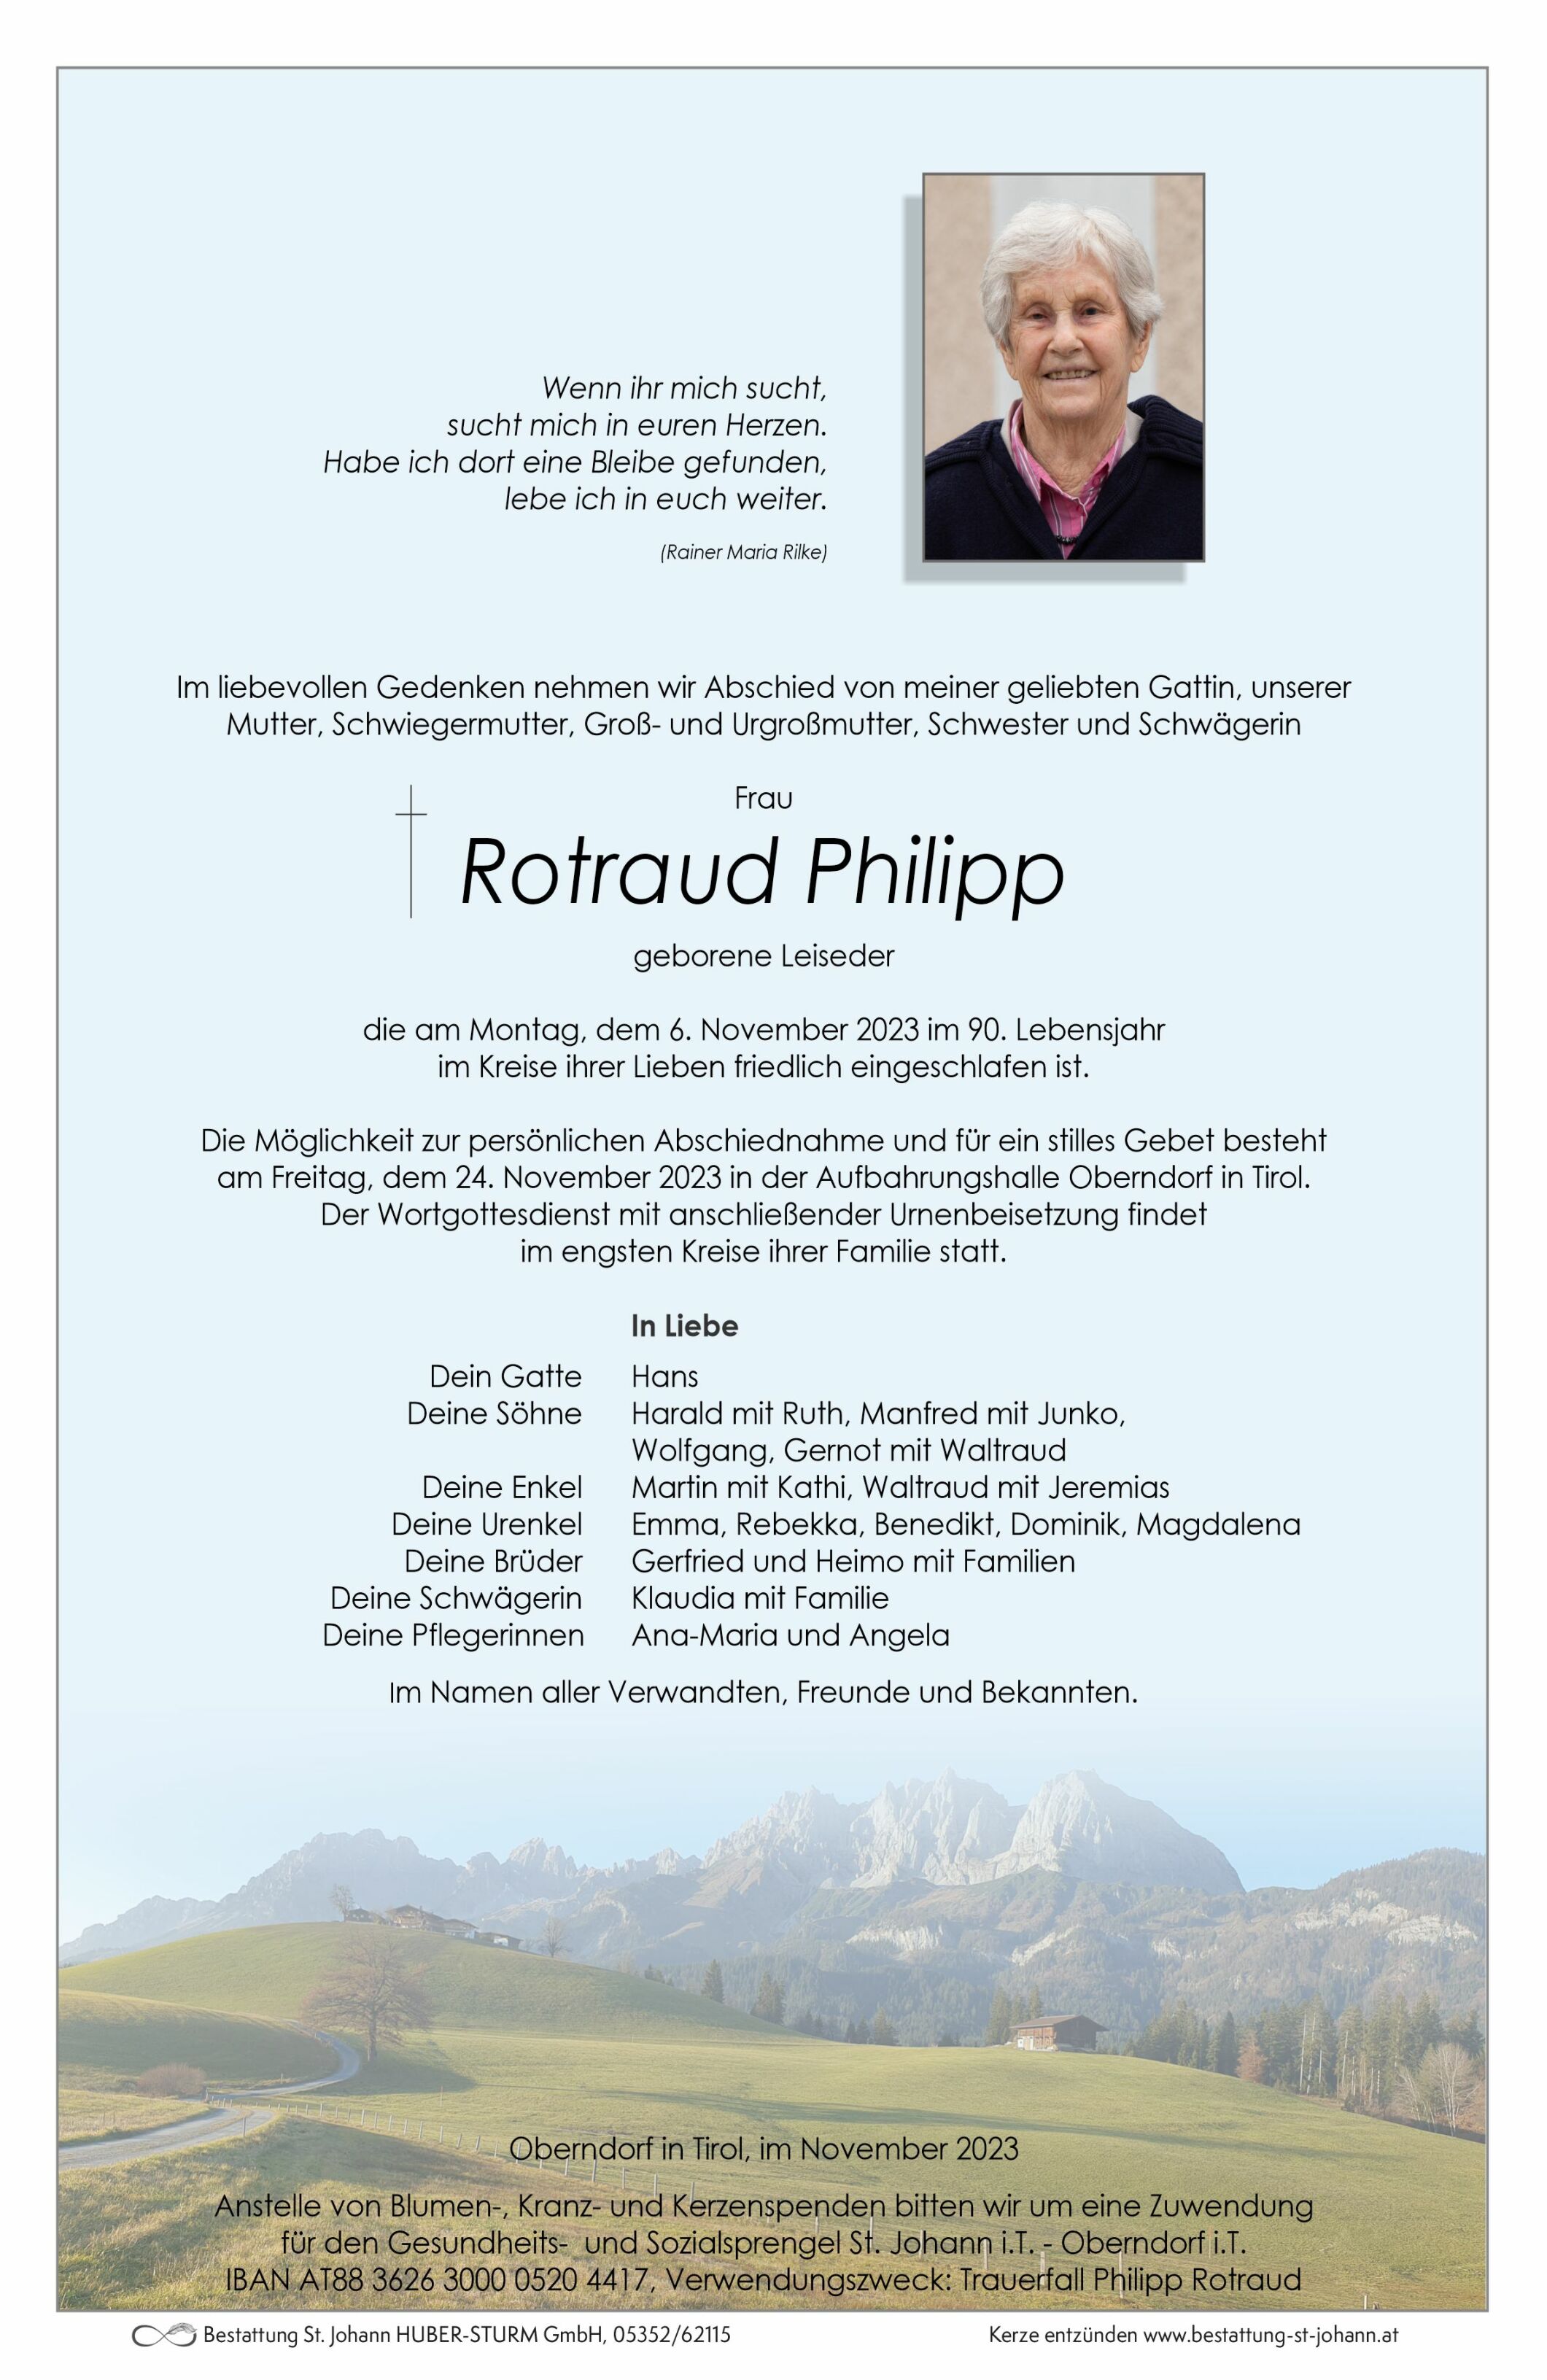 Rotraud Philipp